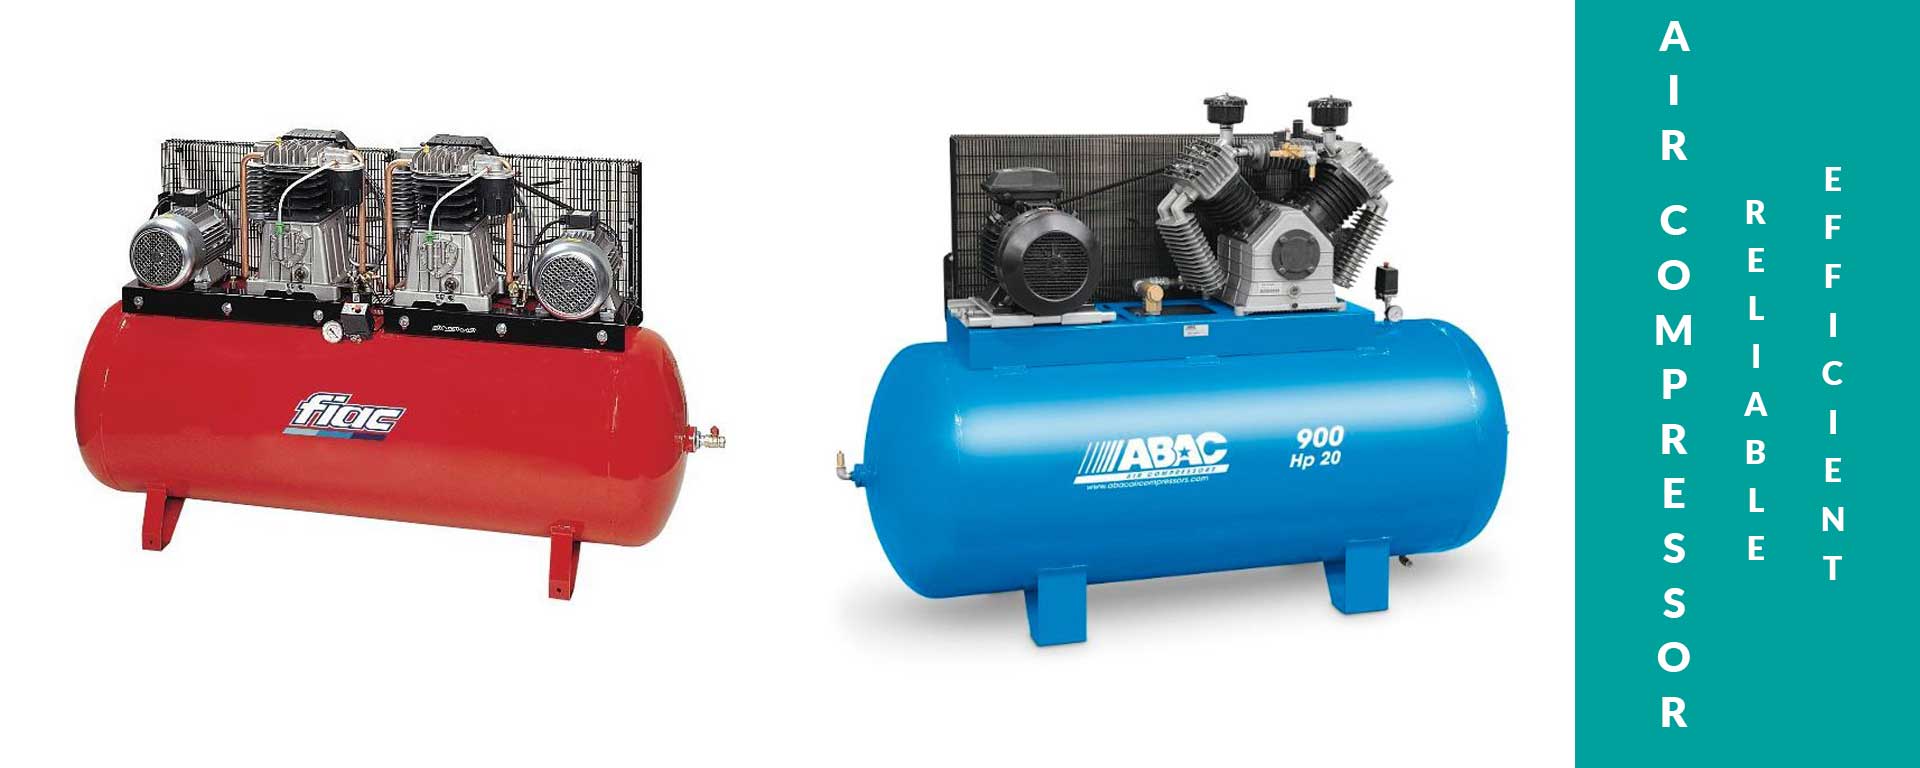 air-compressor-supplier-in-uae-bavaria-equipment-trading-llc-uae